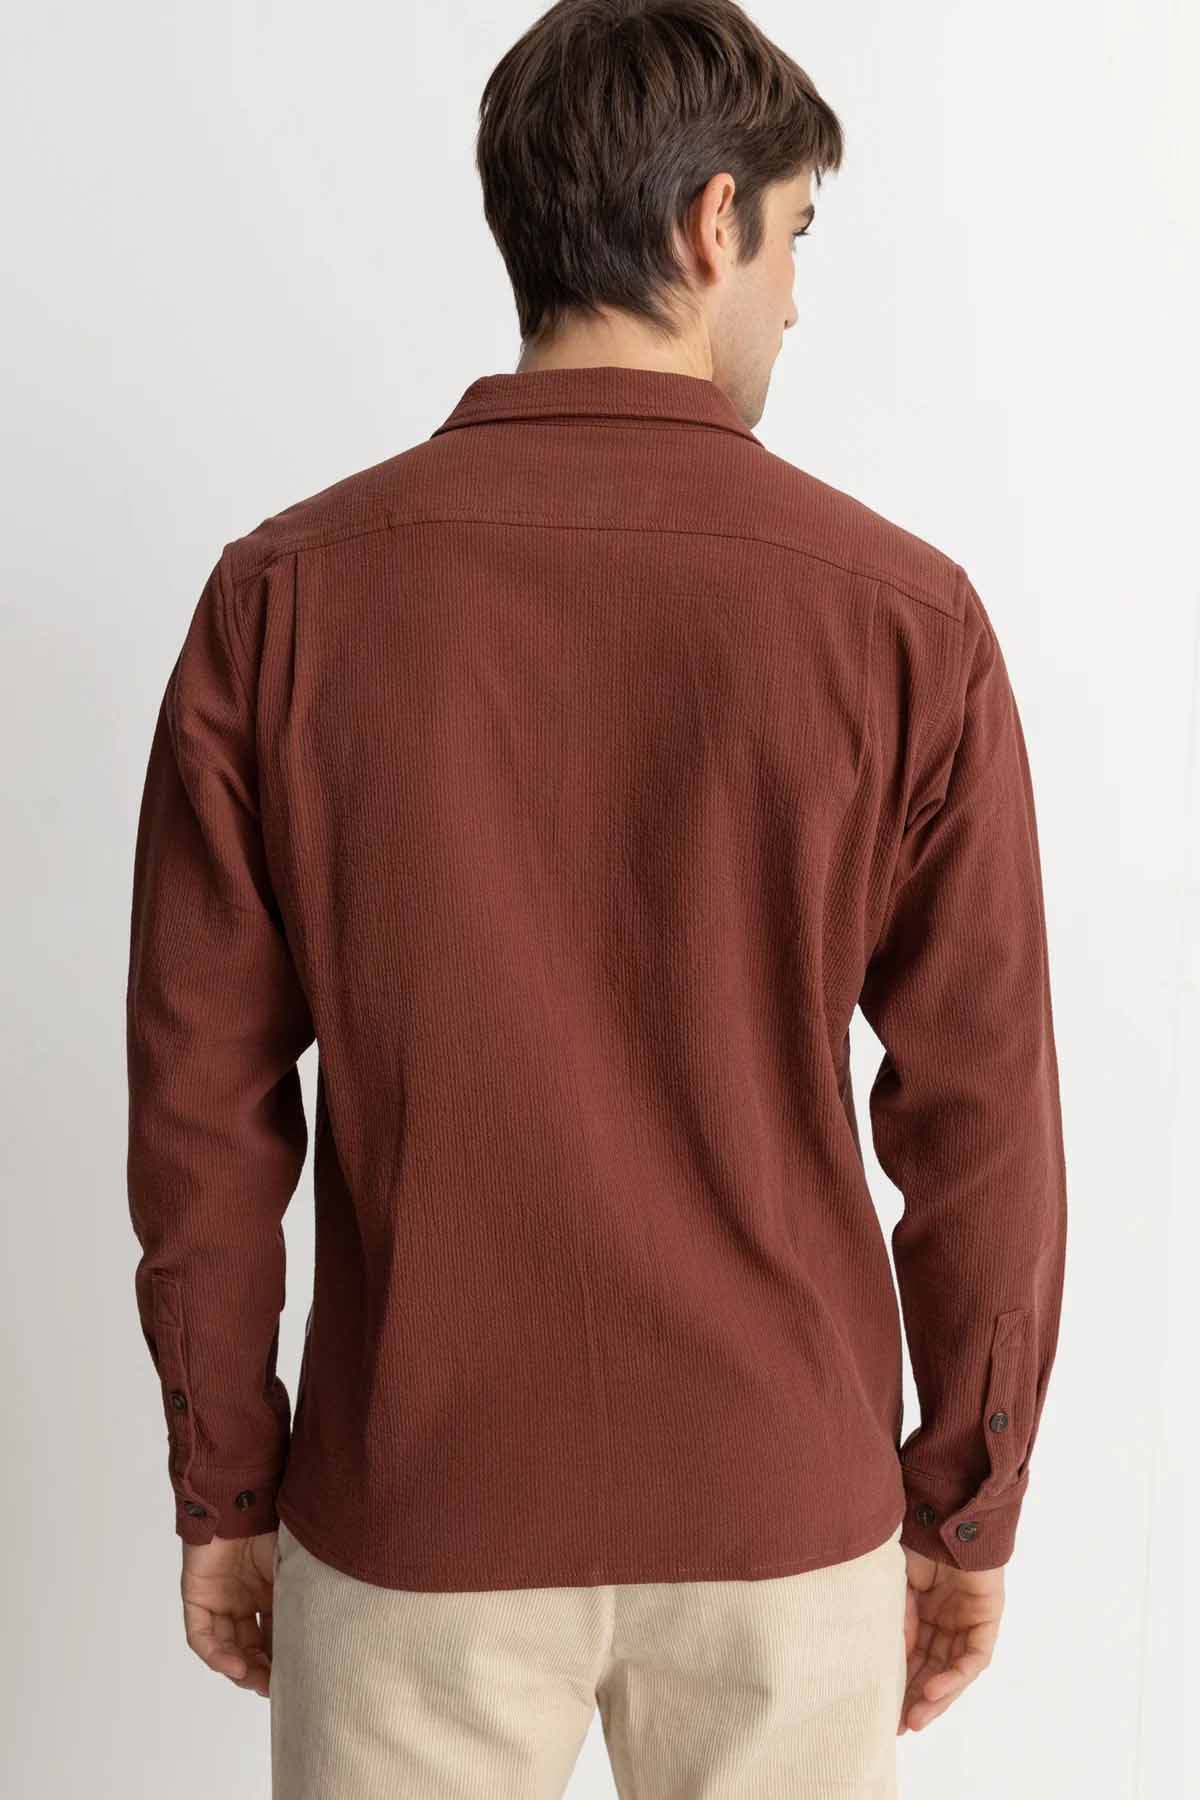 Rhythm - Textured Linen LS Shirt - Clay - Back